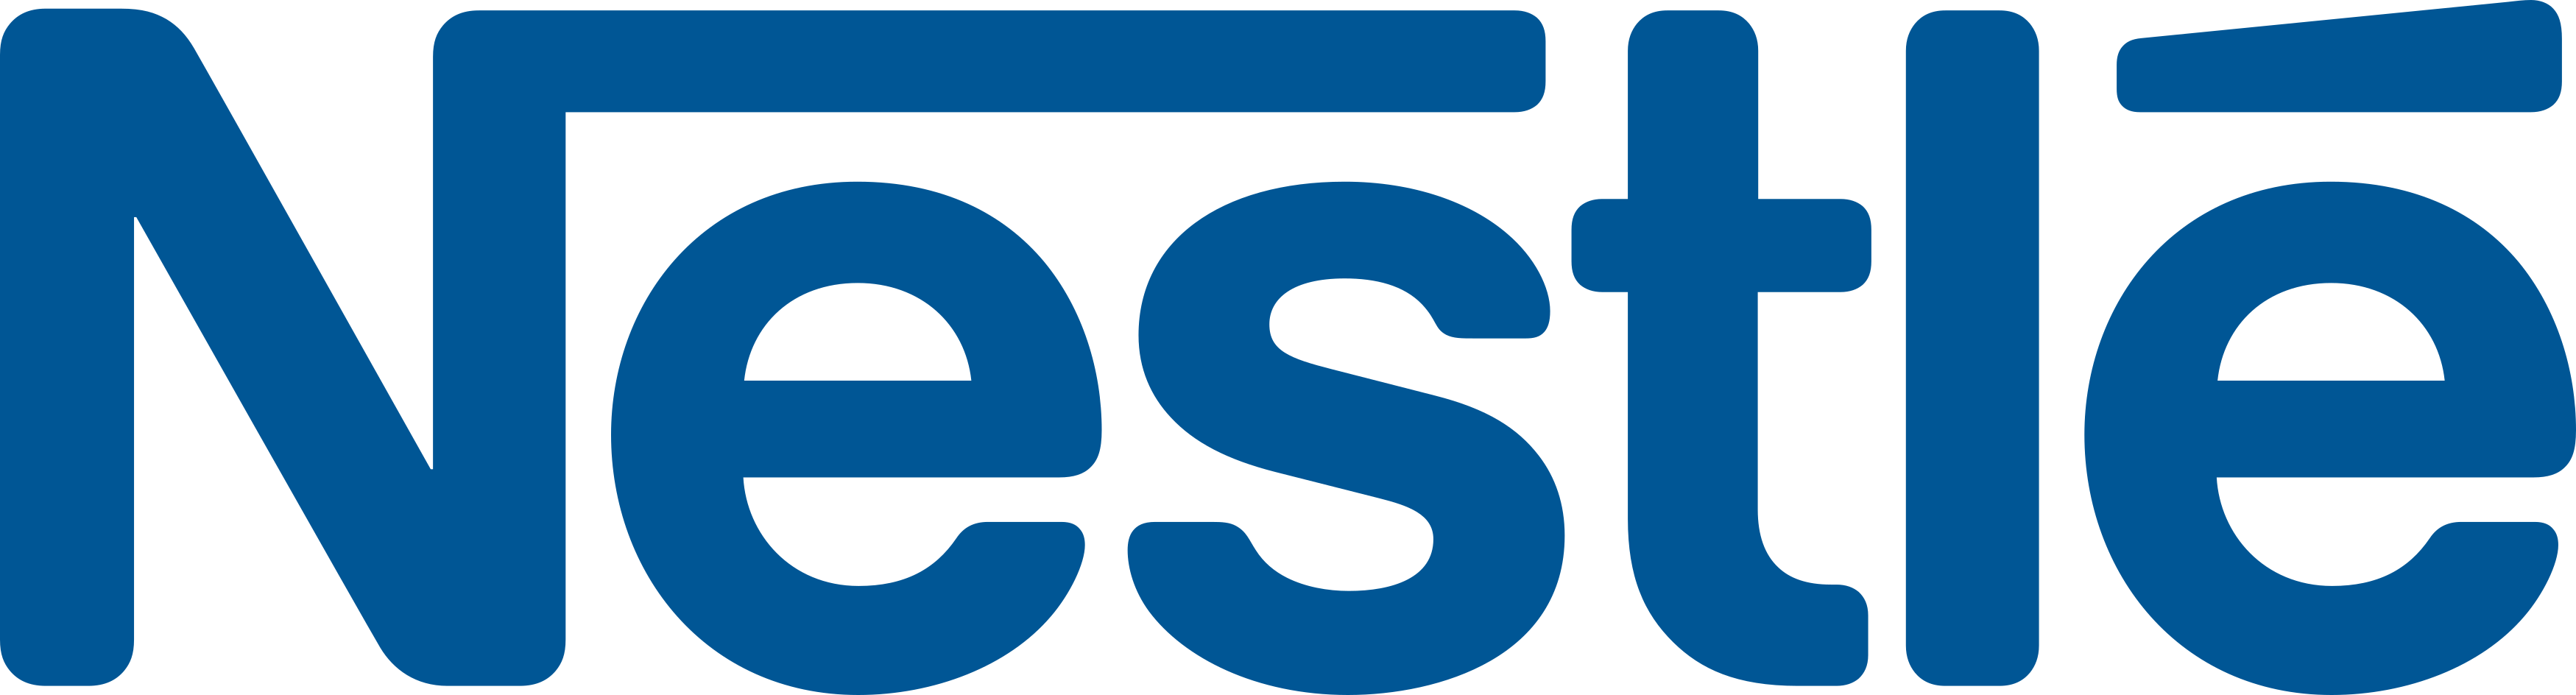 Nestlé-logo